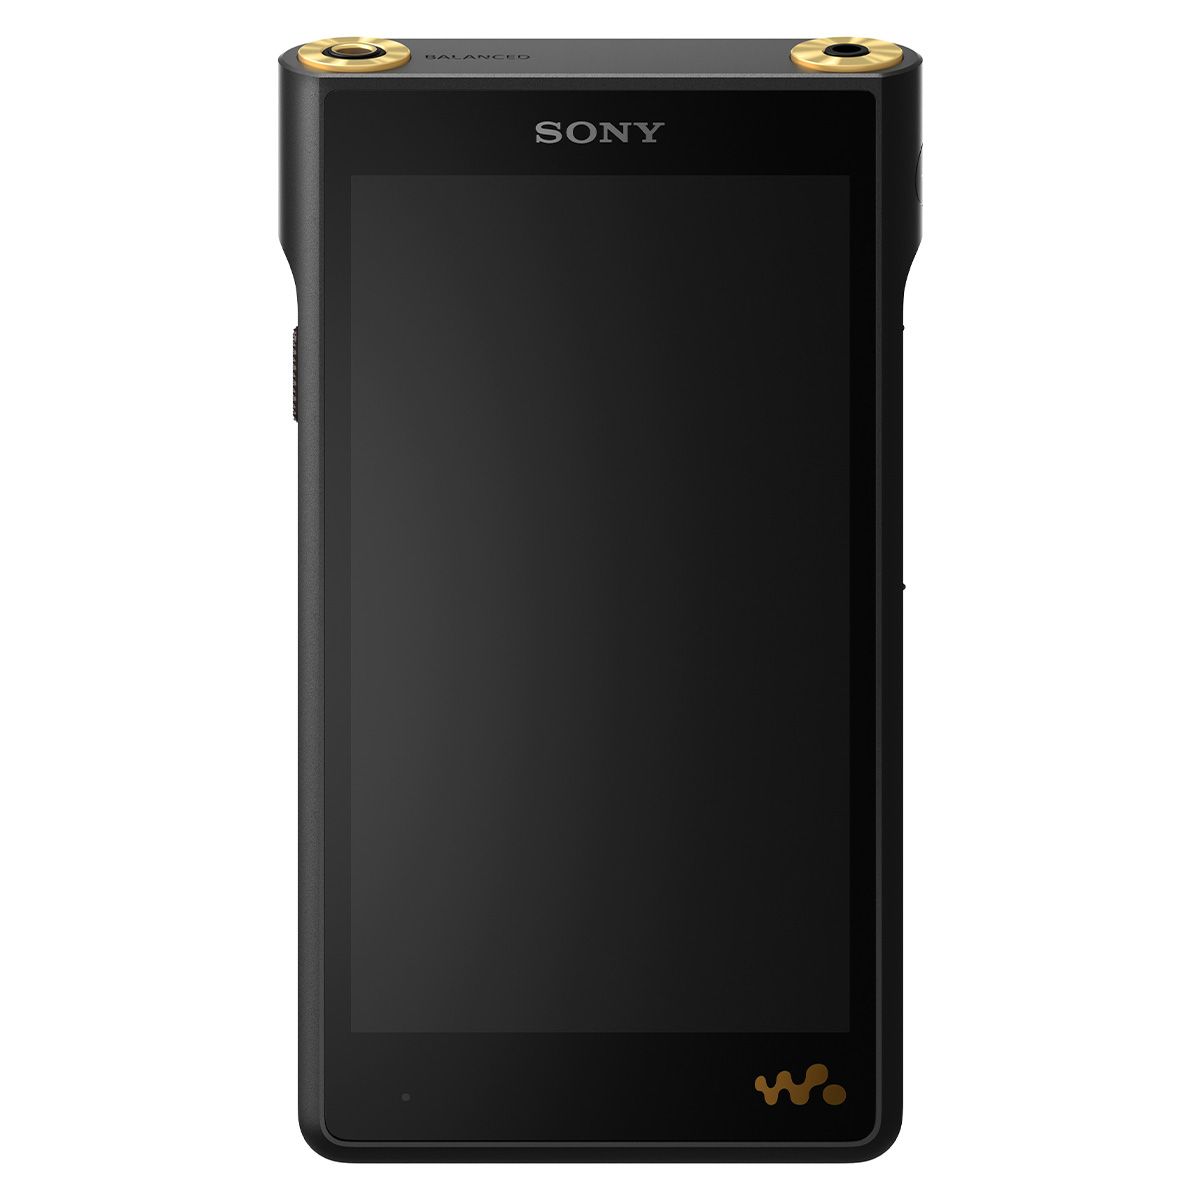 Sony WM1AM2 Walkman Digital Music Player